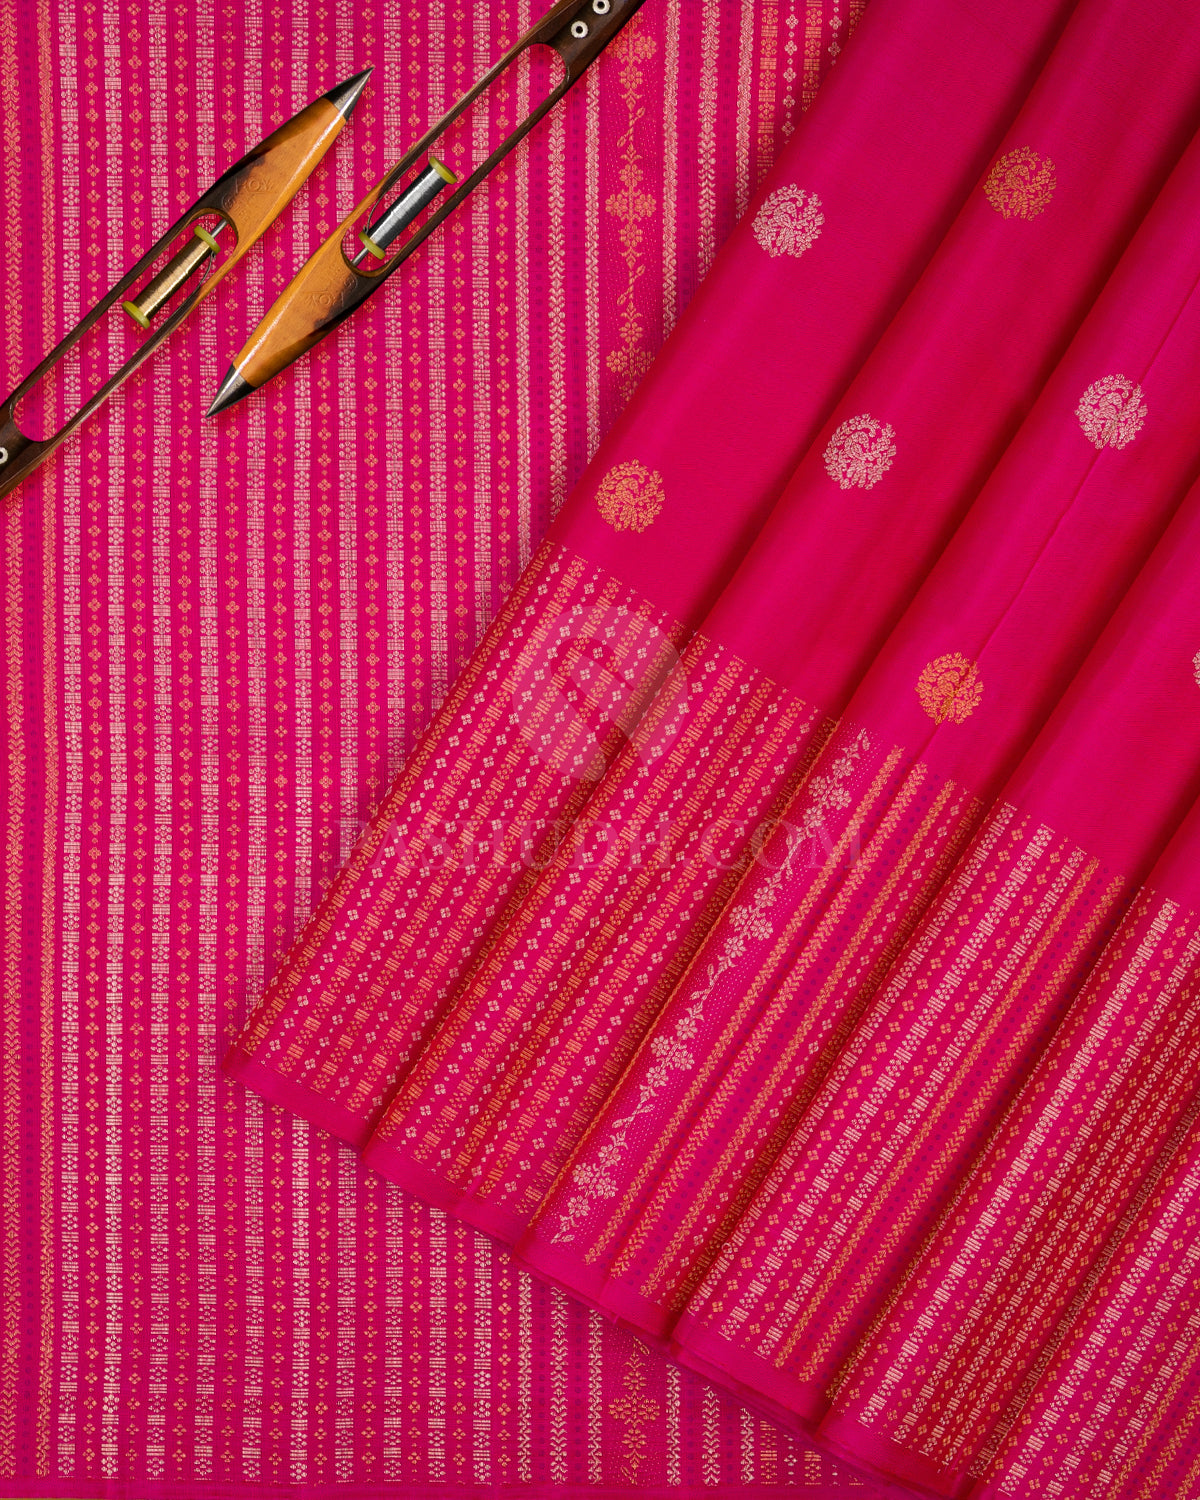 Rani Pink And Golden Khaki Kanjivaram Silk Saree - S1030(C) - View 2